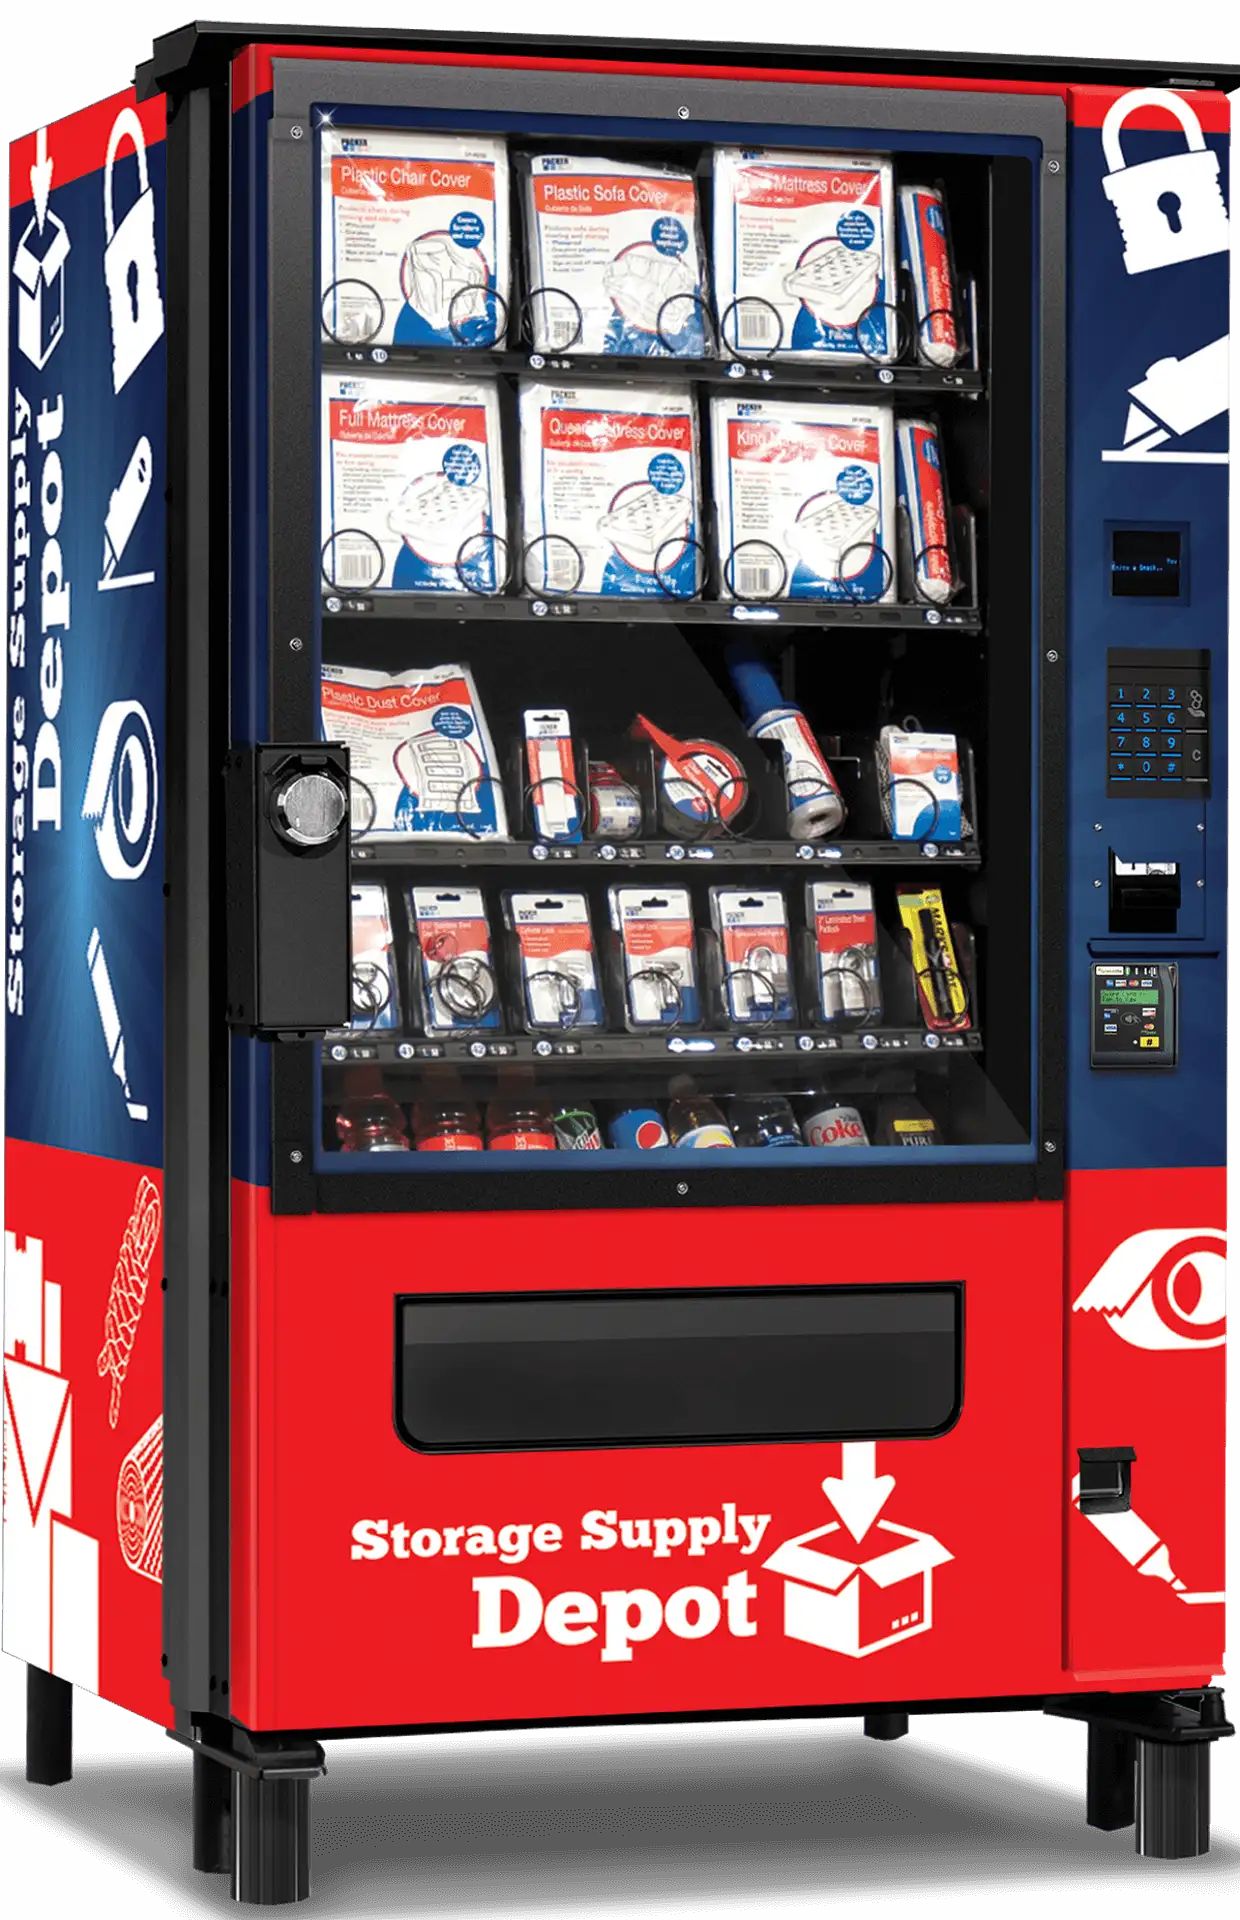 Storage Supply Depot Vending Machine For sale